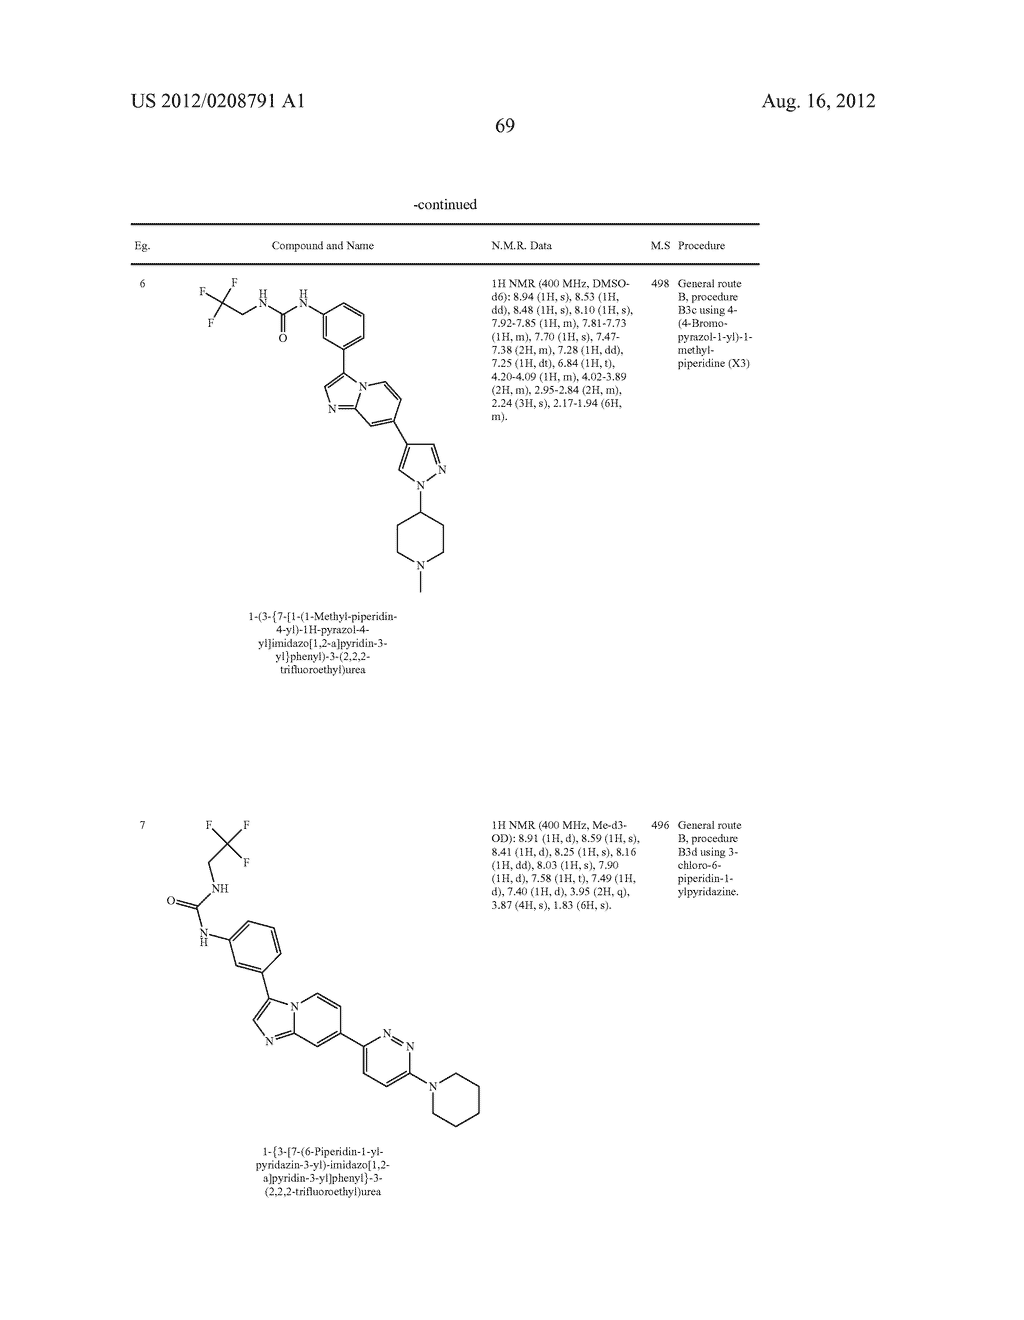 IMIDAZOPYRIDINE DERIVATIVES AS INHIBITORS OF RECEPTOR TYROSINE KINASES - diagram, schematic, and image 70